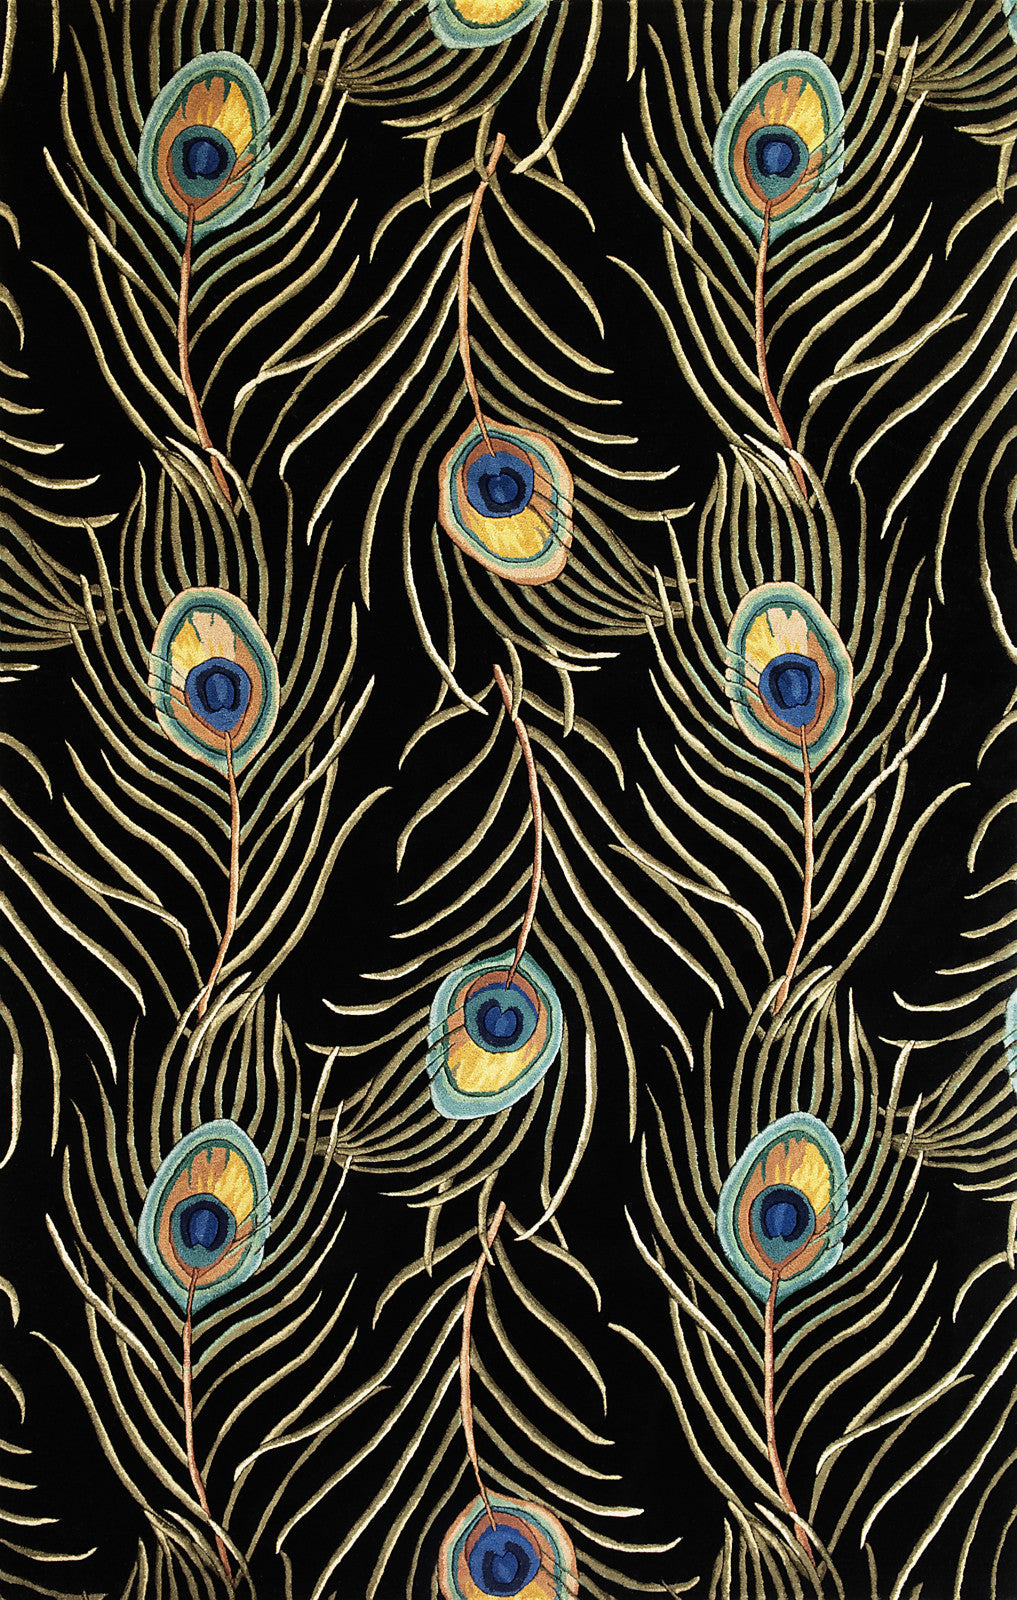 Swirls Pattern Peacock Design Area Rug Black/Blue – Handcraft Rugs